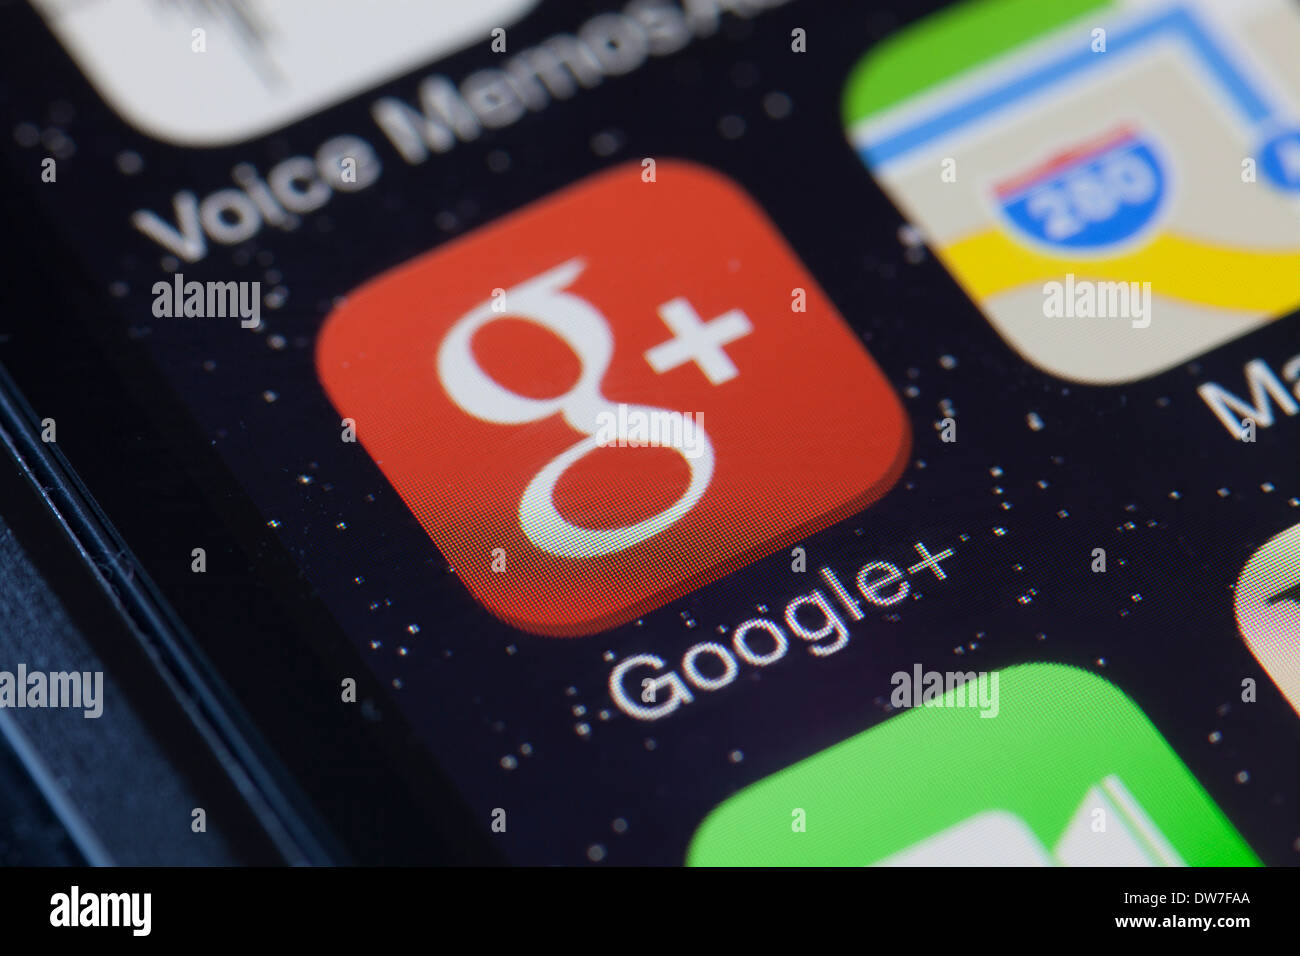 Google+ app icon on mobile phone. Stock Photo